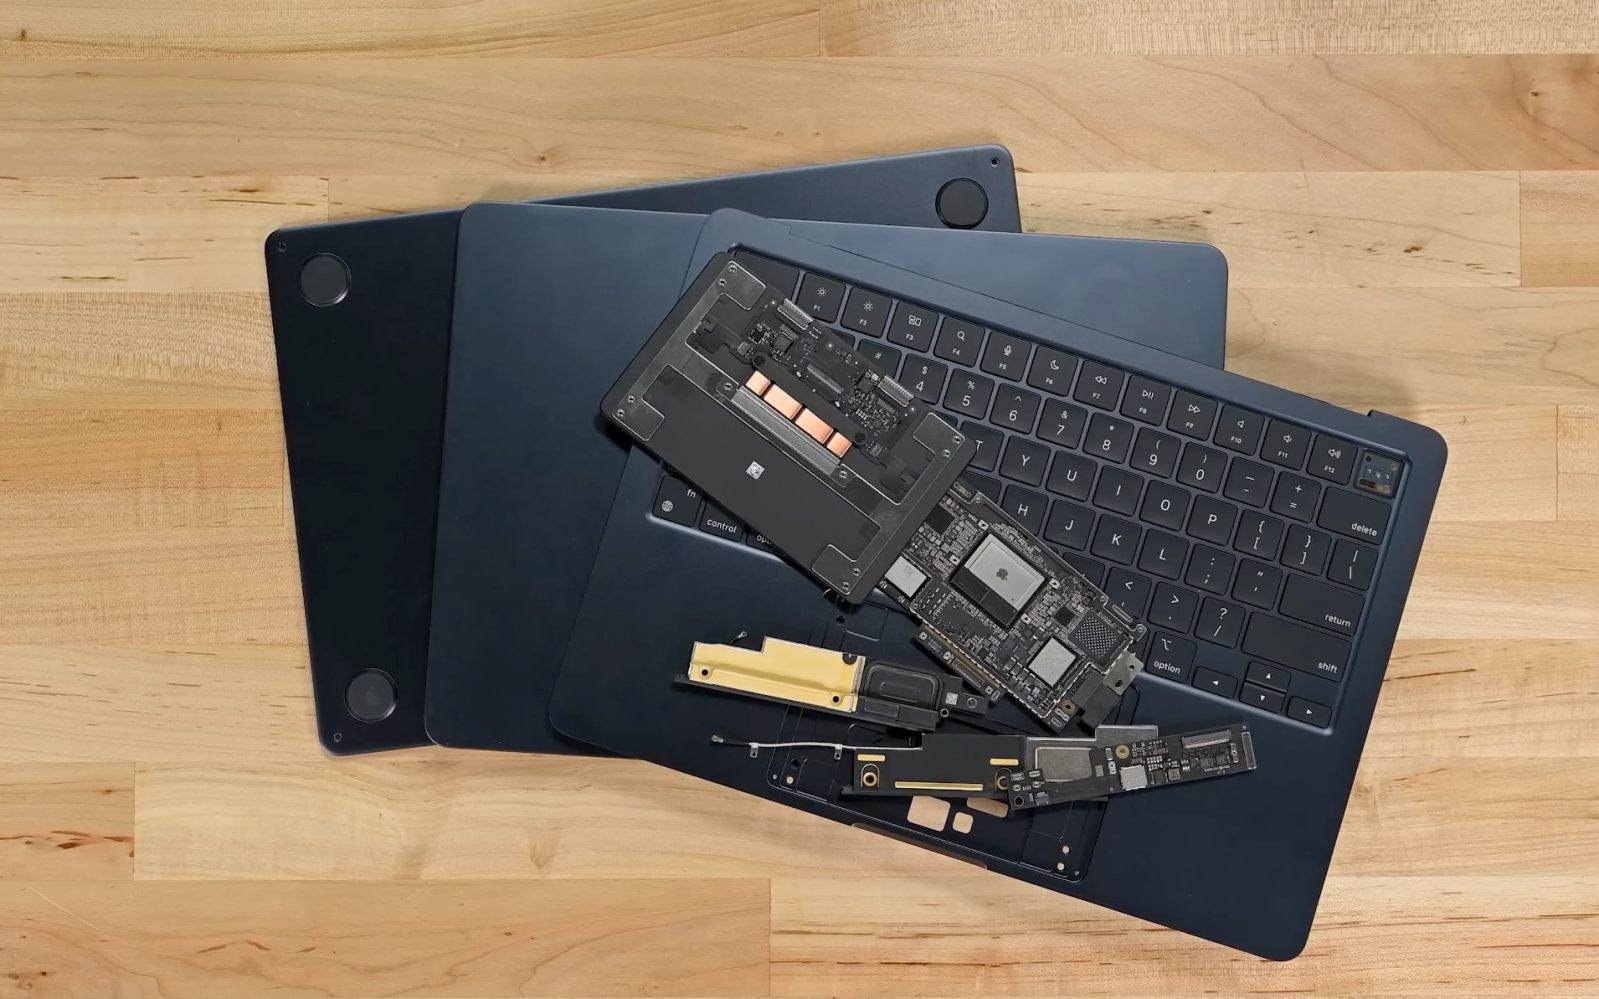 Kwade trouw Gooey Direct iFixit teardown shows the inside of M2 MacBook Air - 9to5Mac